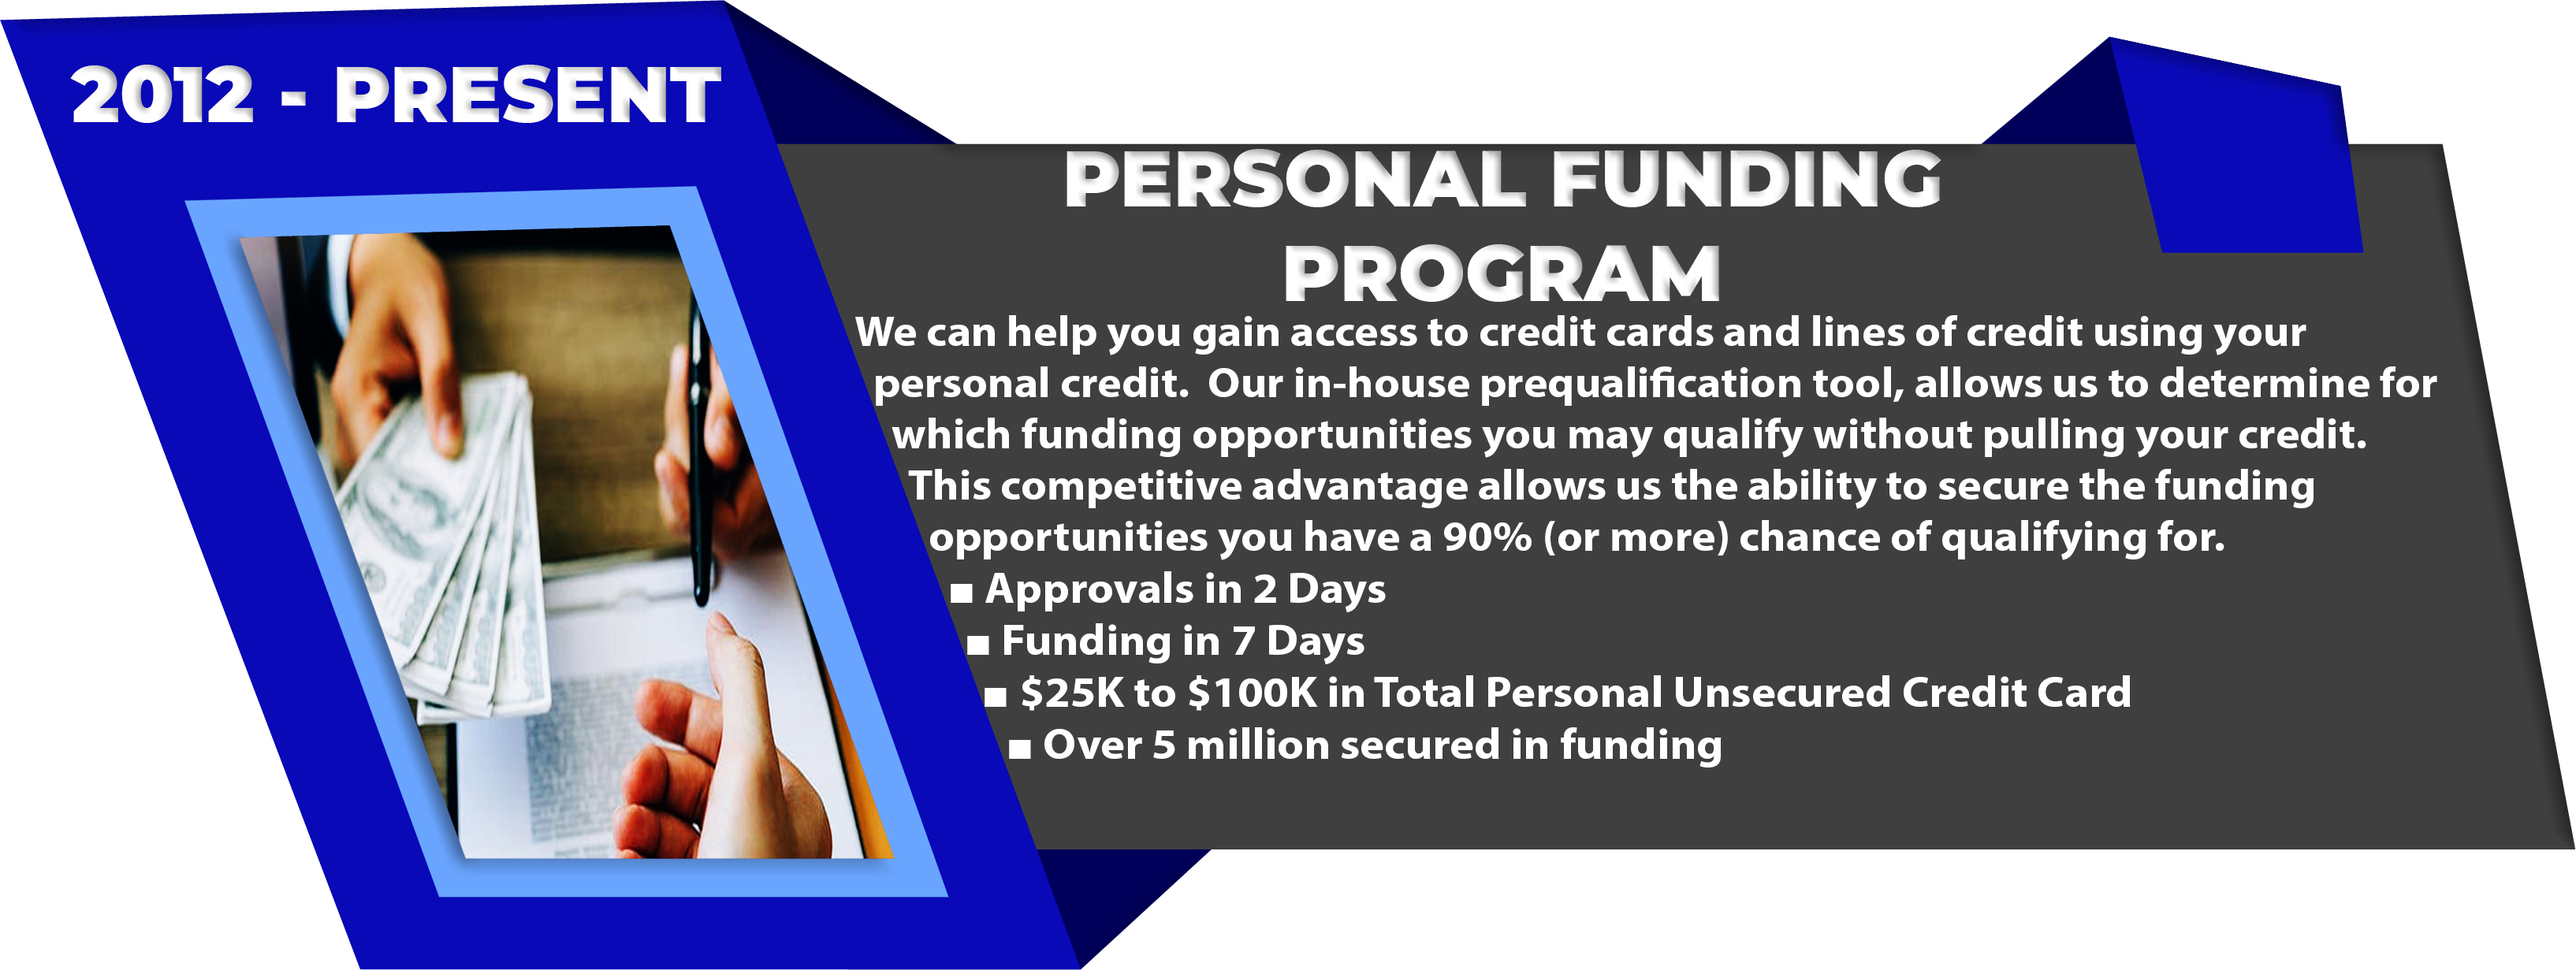 Personal Funding Program 2012 – Present